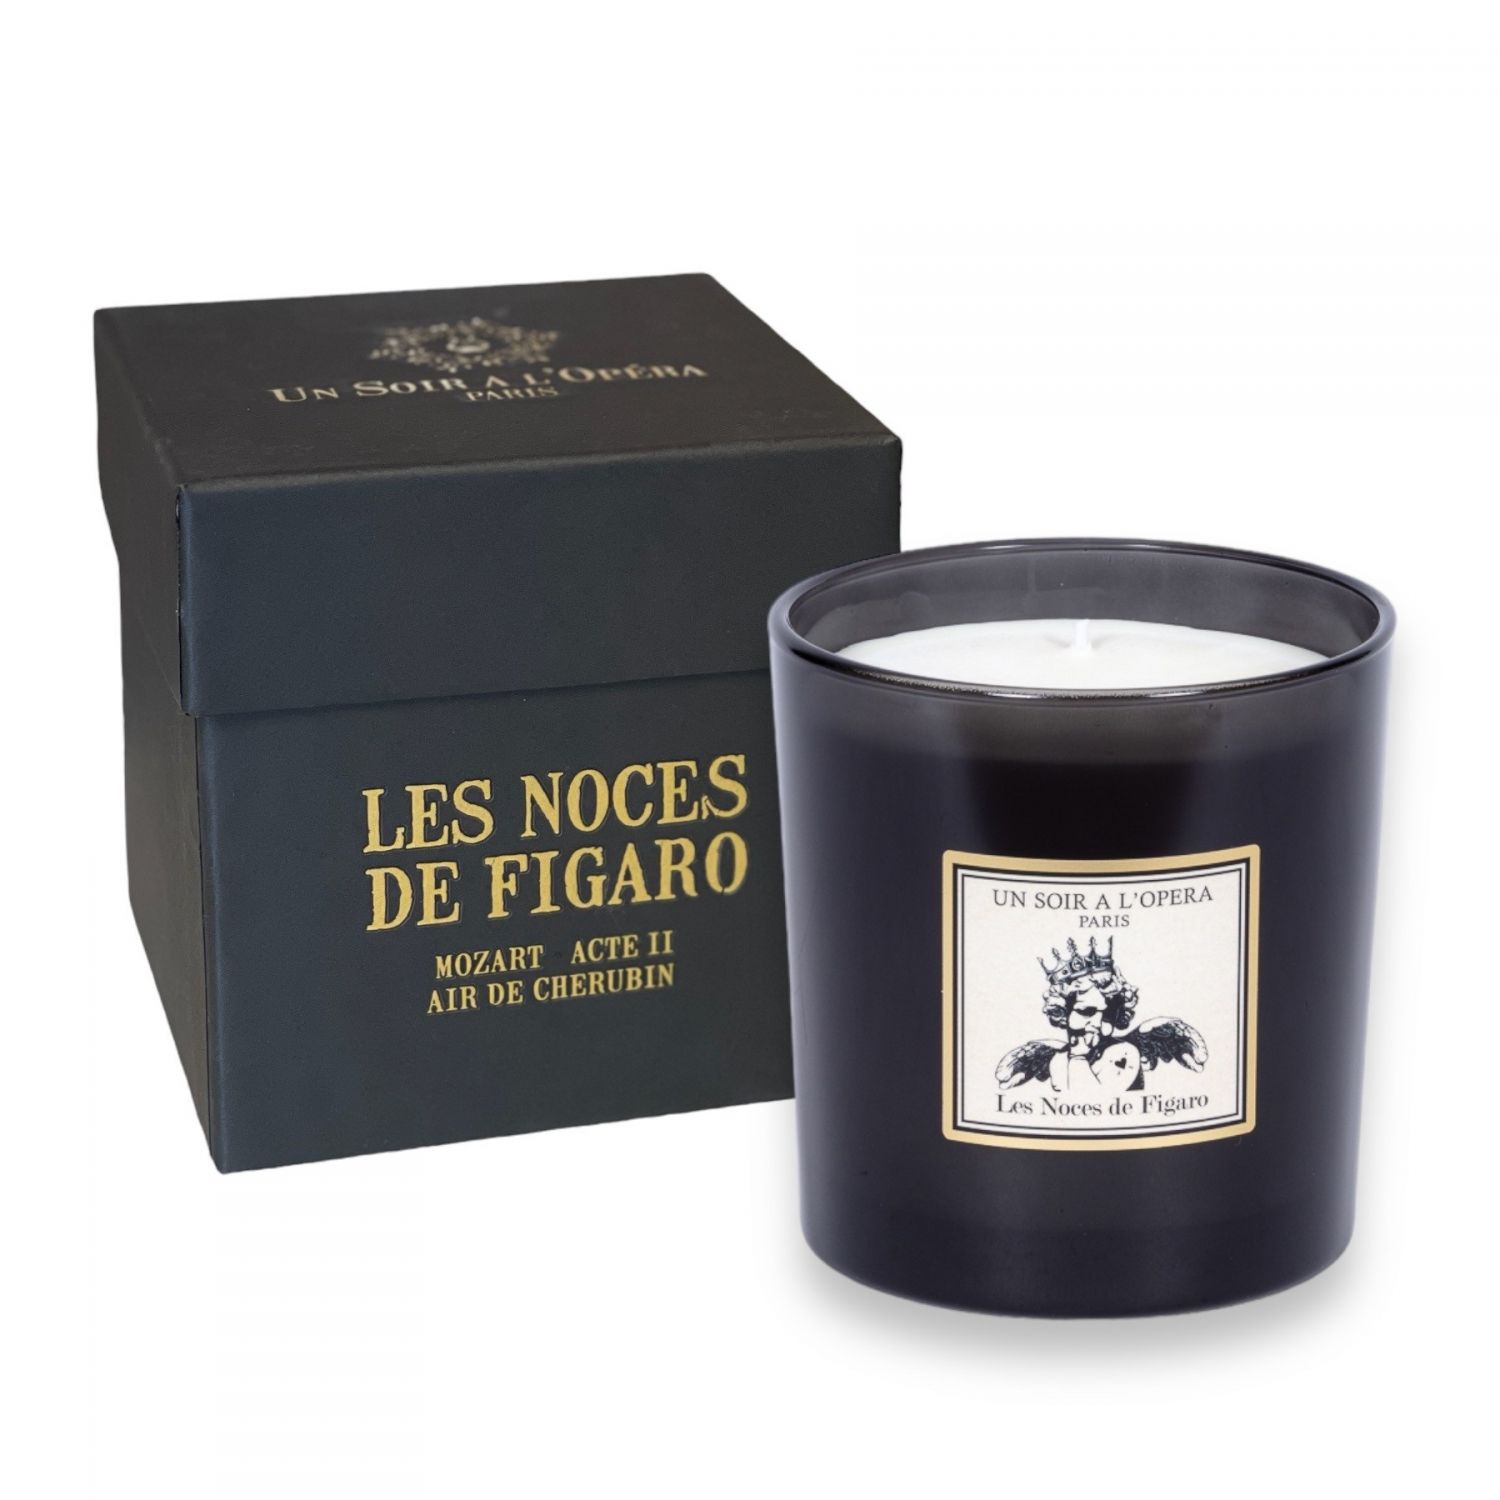 MARRIAGE OF FIGARO - Christmas Luxury scented candle 550g - Citrus Rose - 2 units minimum